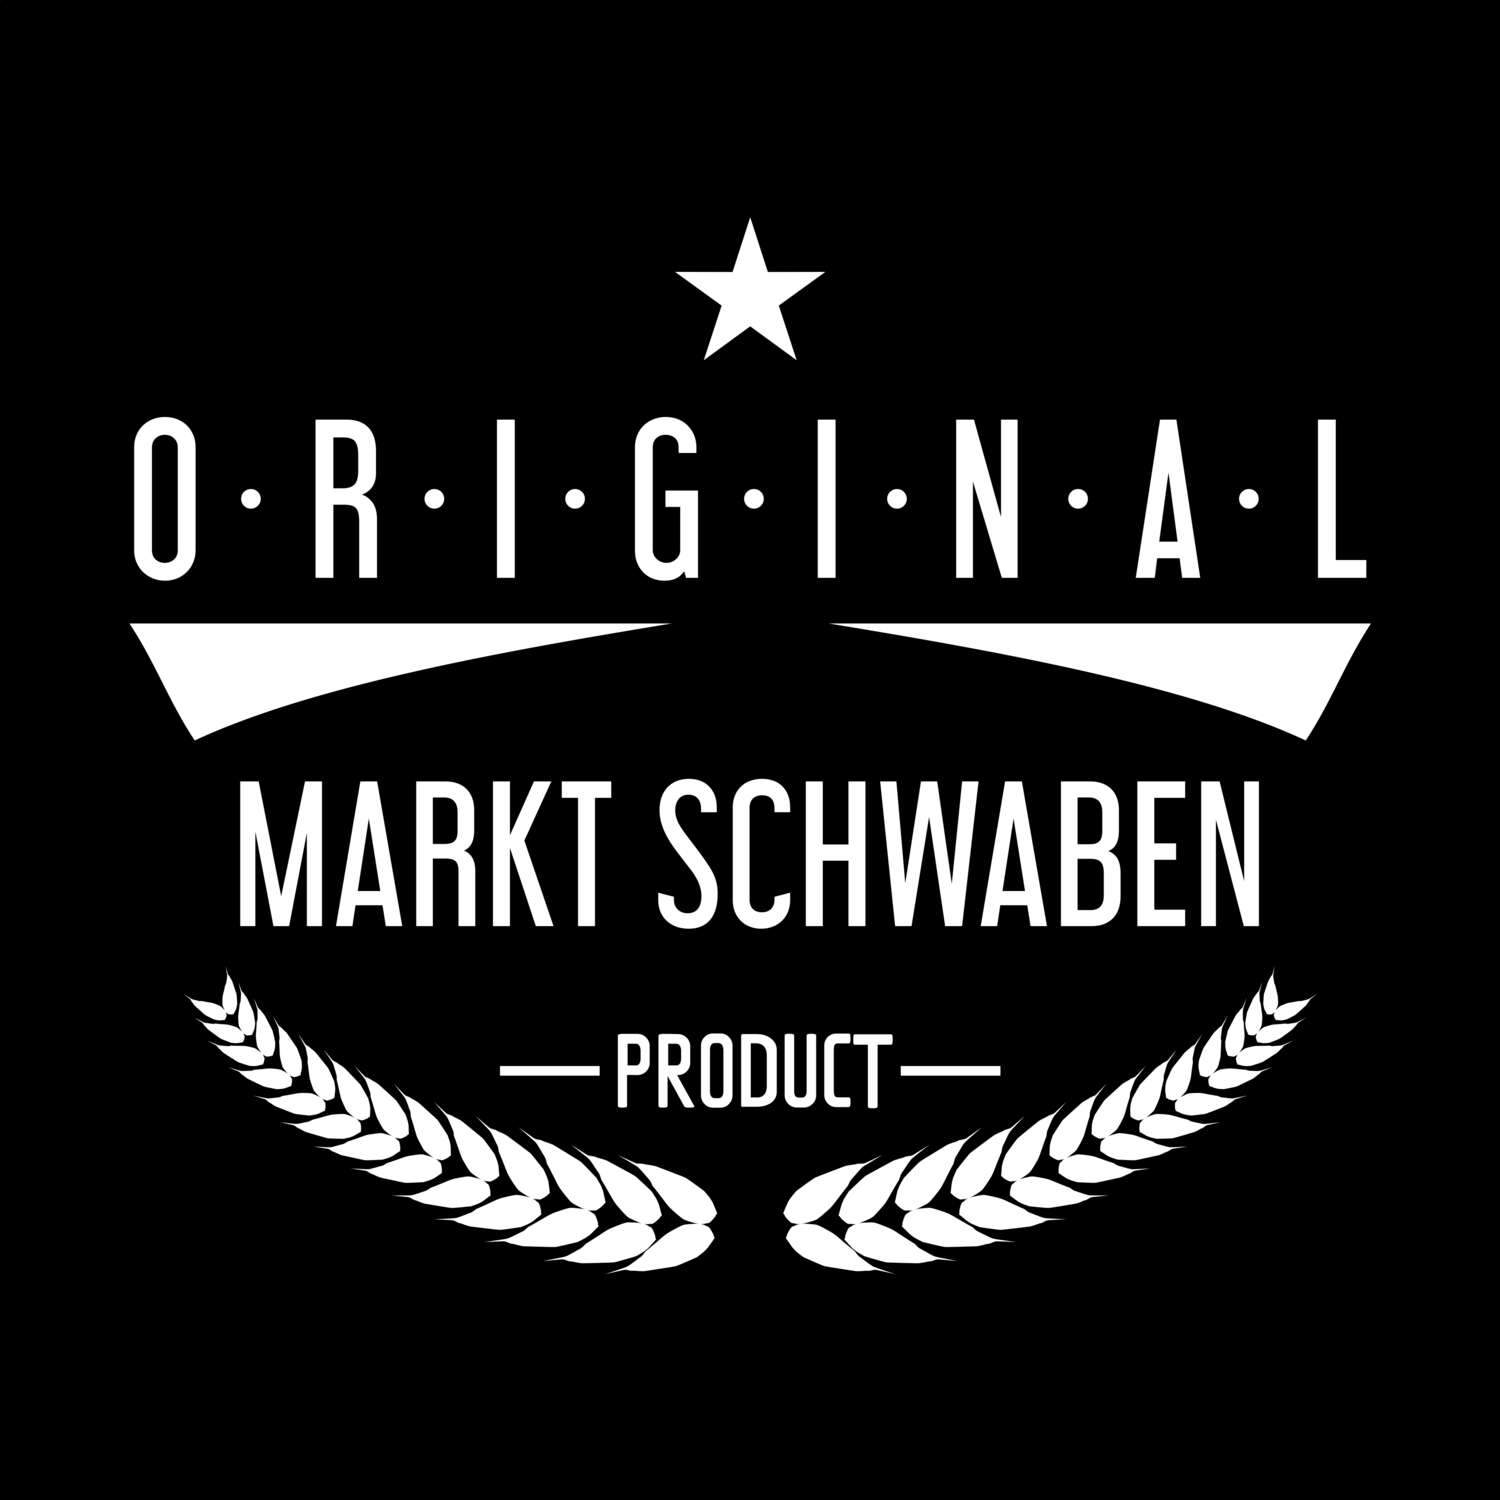 Markt Schwaben T-Shirt »Original Product«